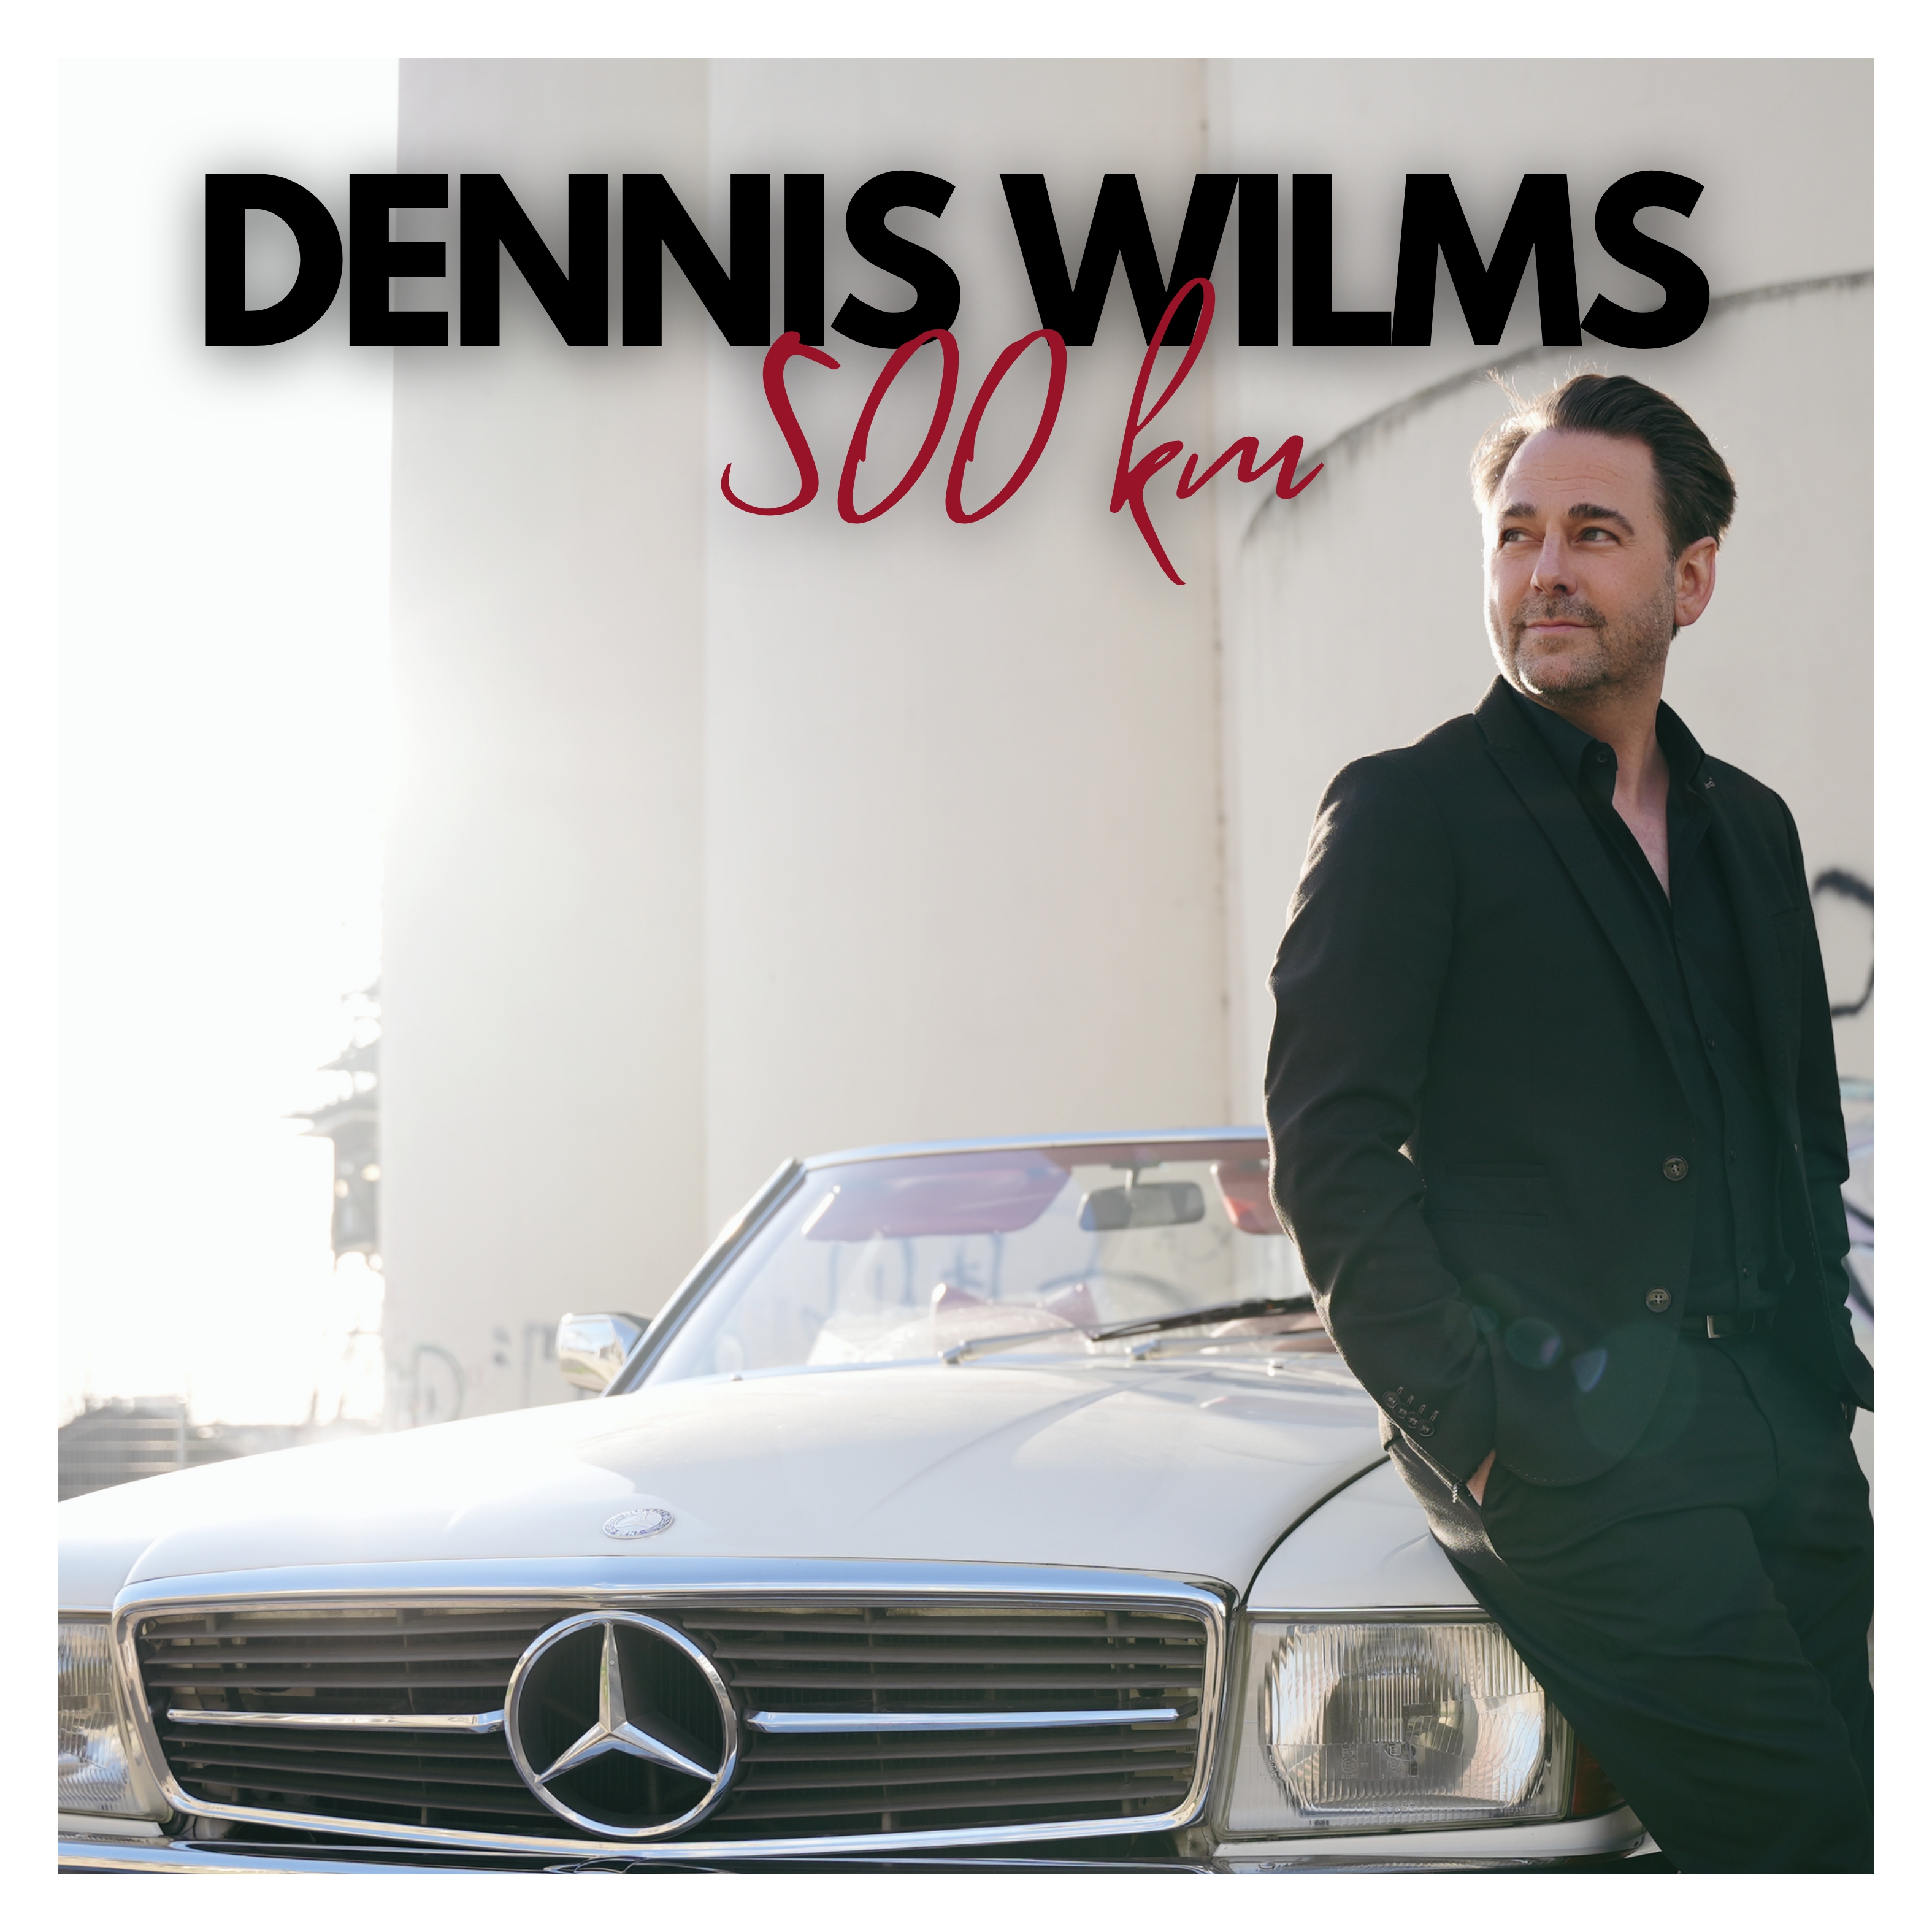 DENNIS WILMS * 500km (Download-Track)